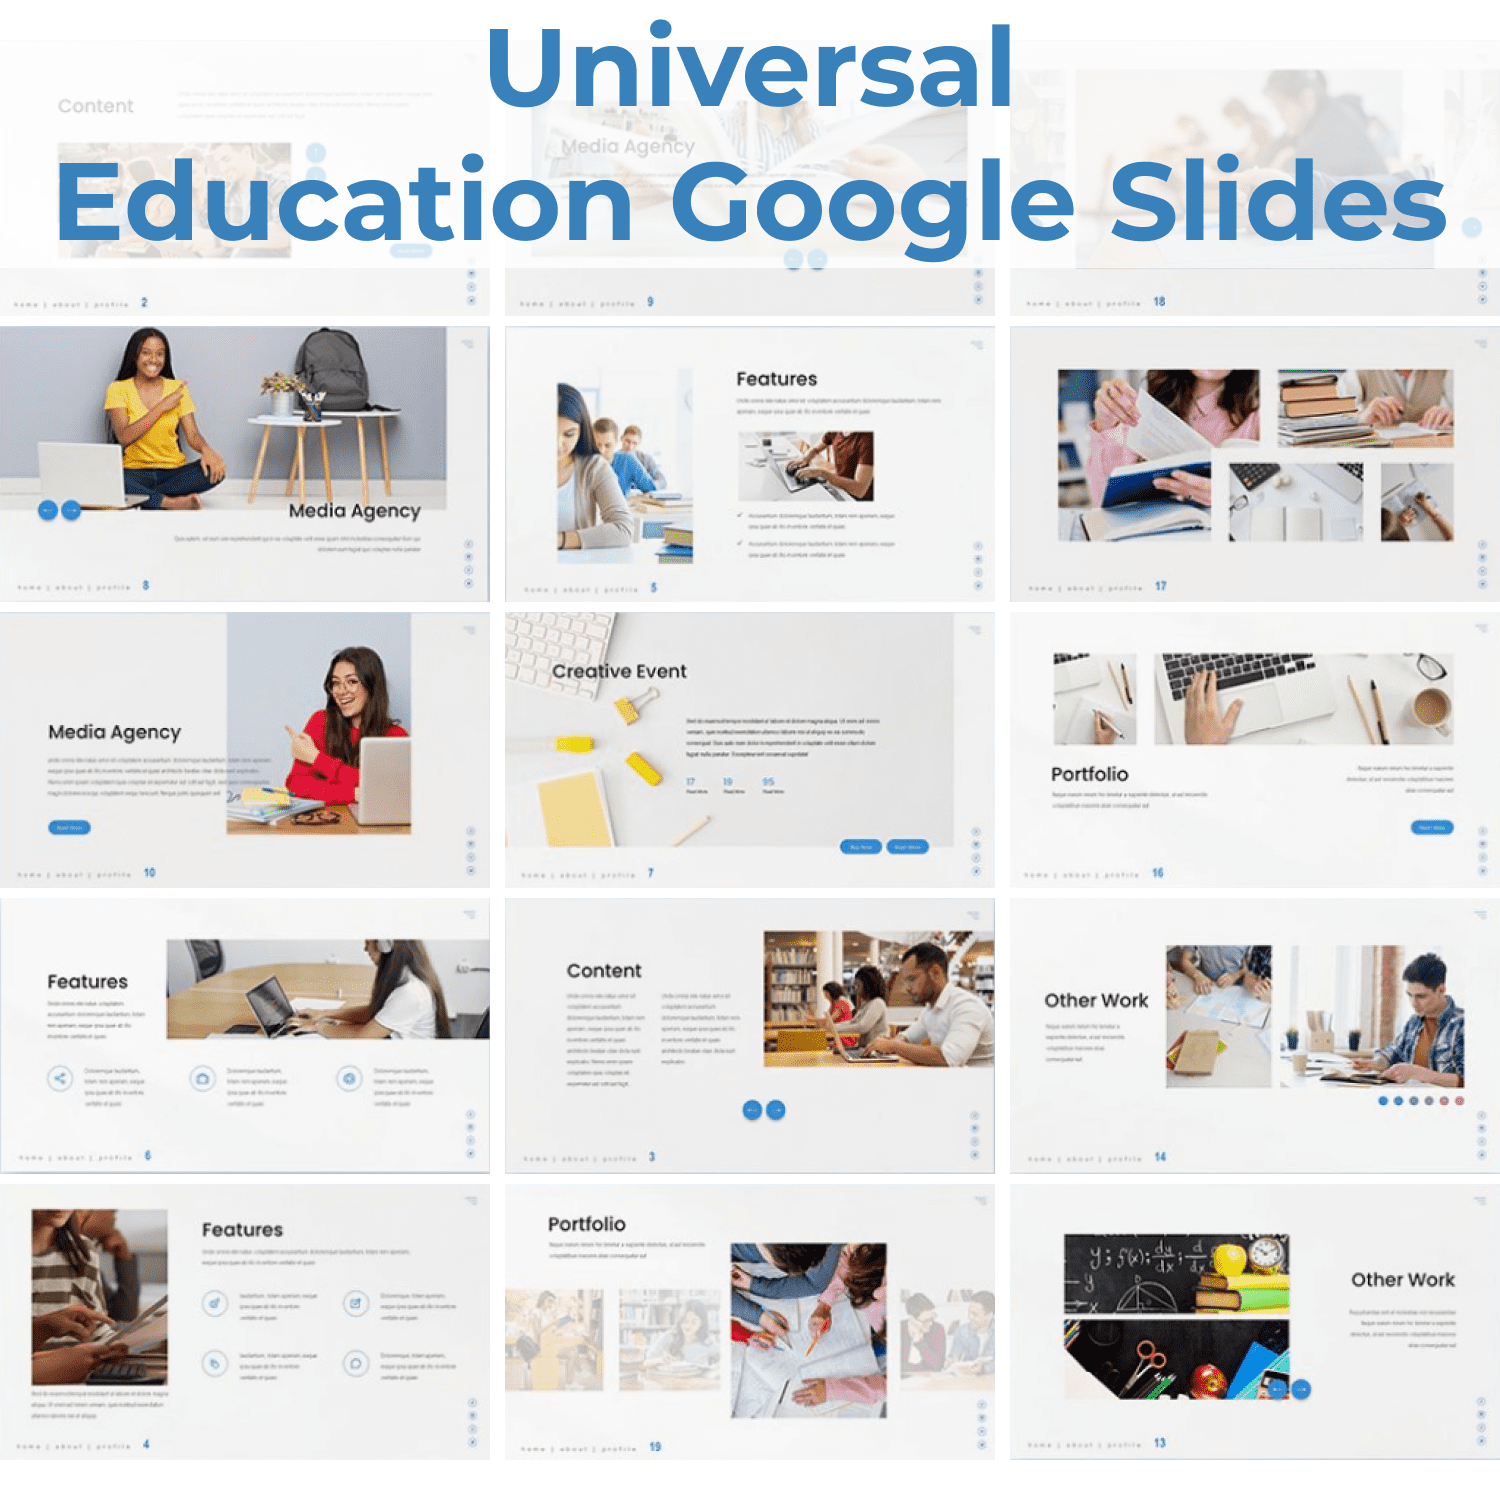 Universal - Education Google Slides cover image.